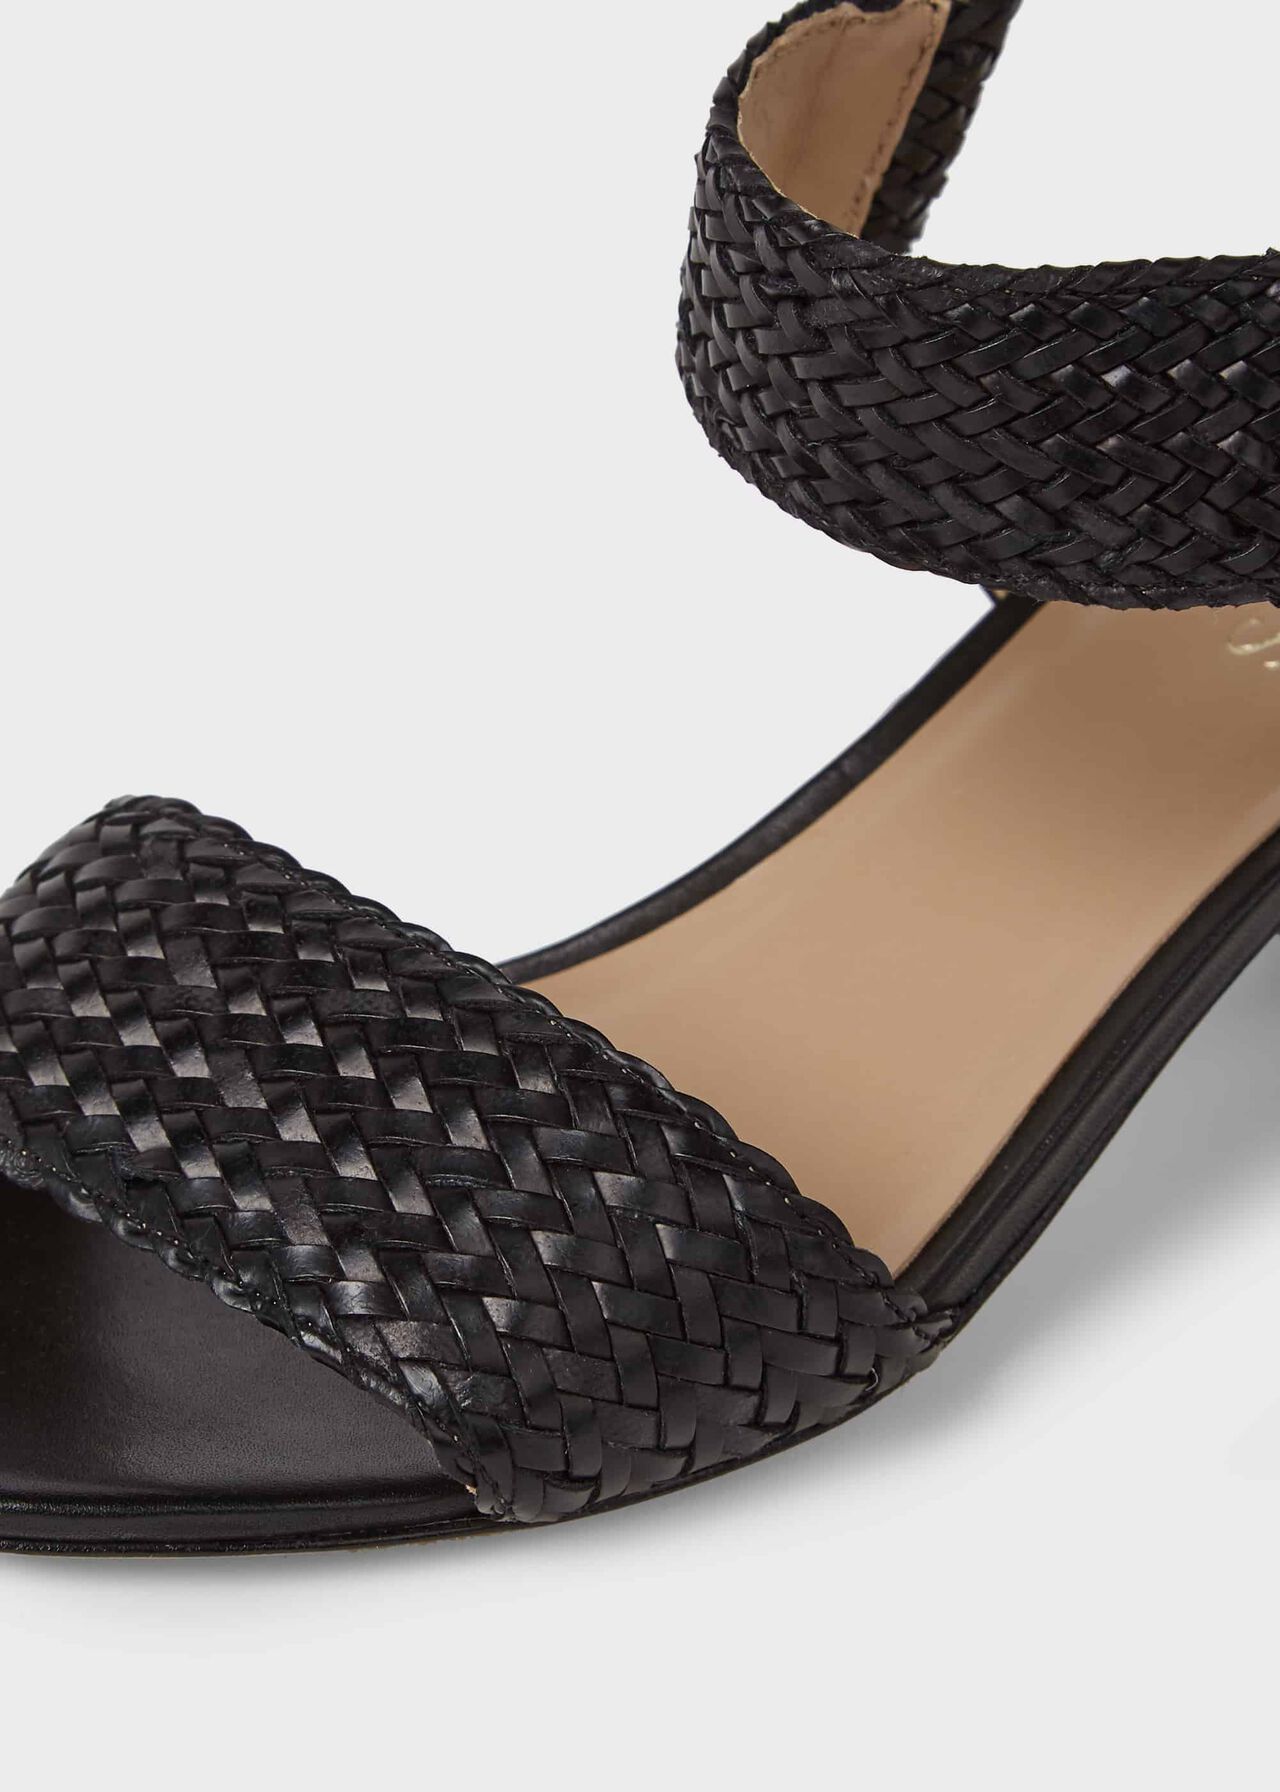 Lois Leather Sandals, Black, hi-res